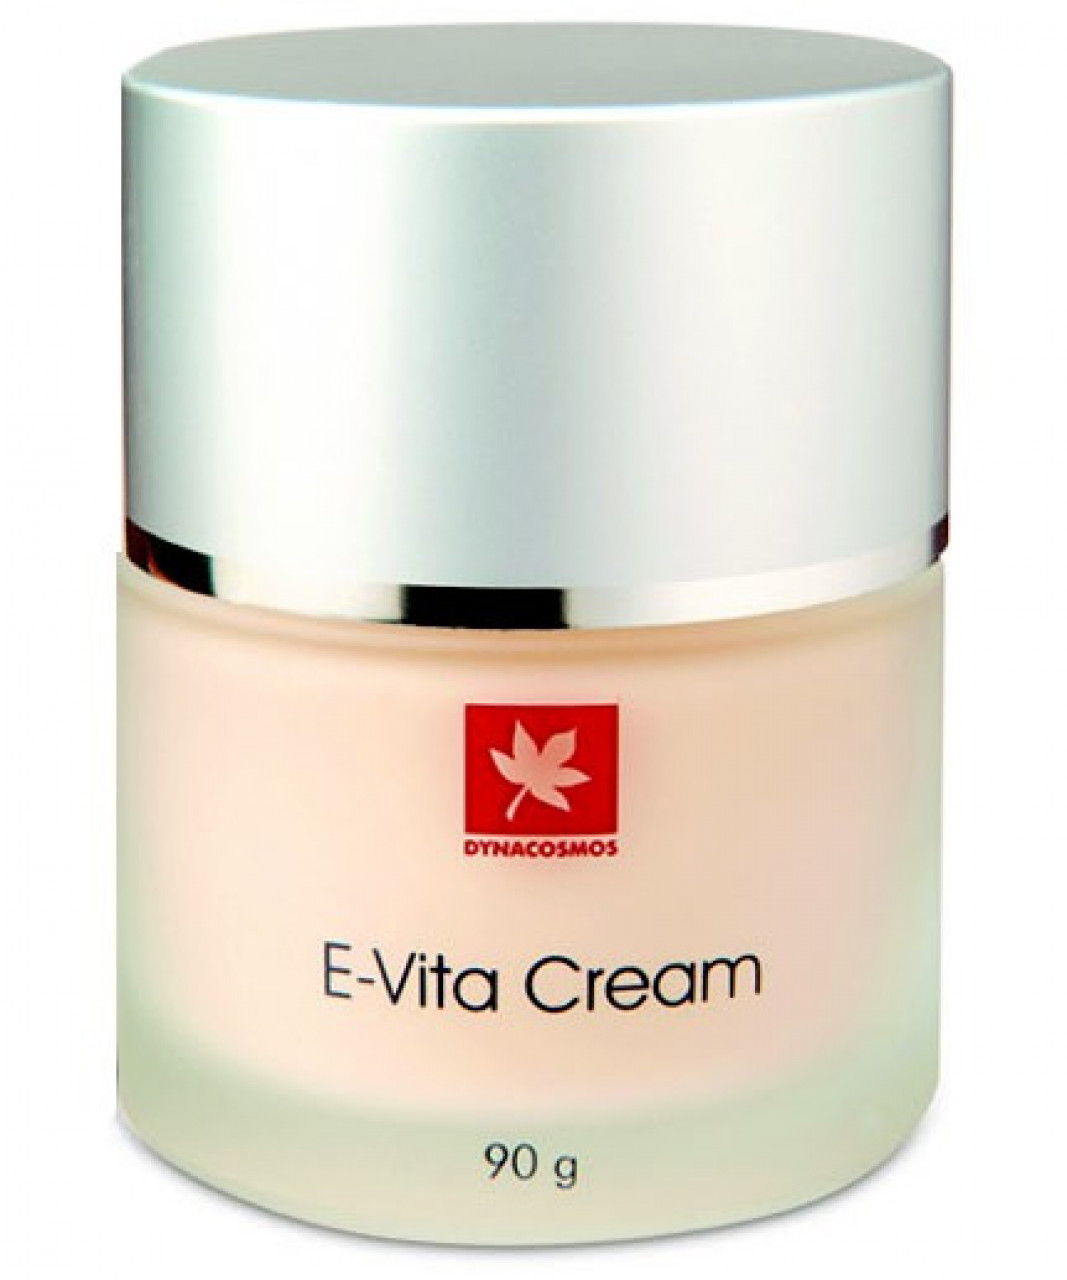 E-vita cream, Perfumes - Cosméticos, Bissau